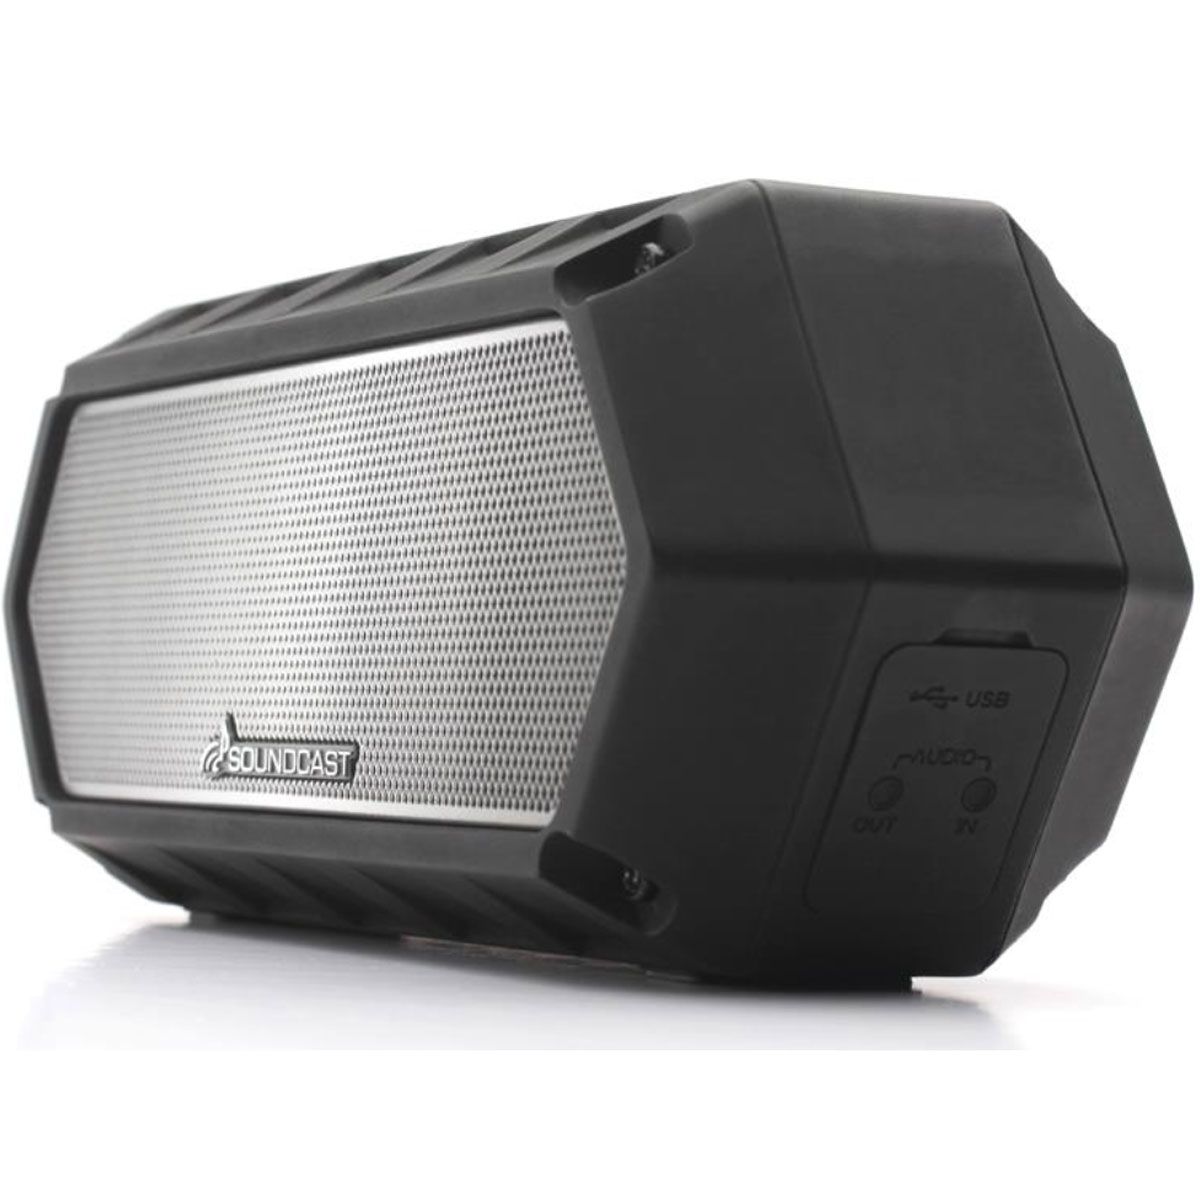 Soundcast VG1
Waterproof portable Bluetooth® speaker, side view